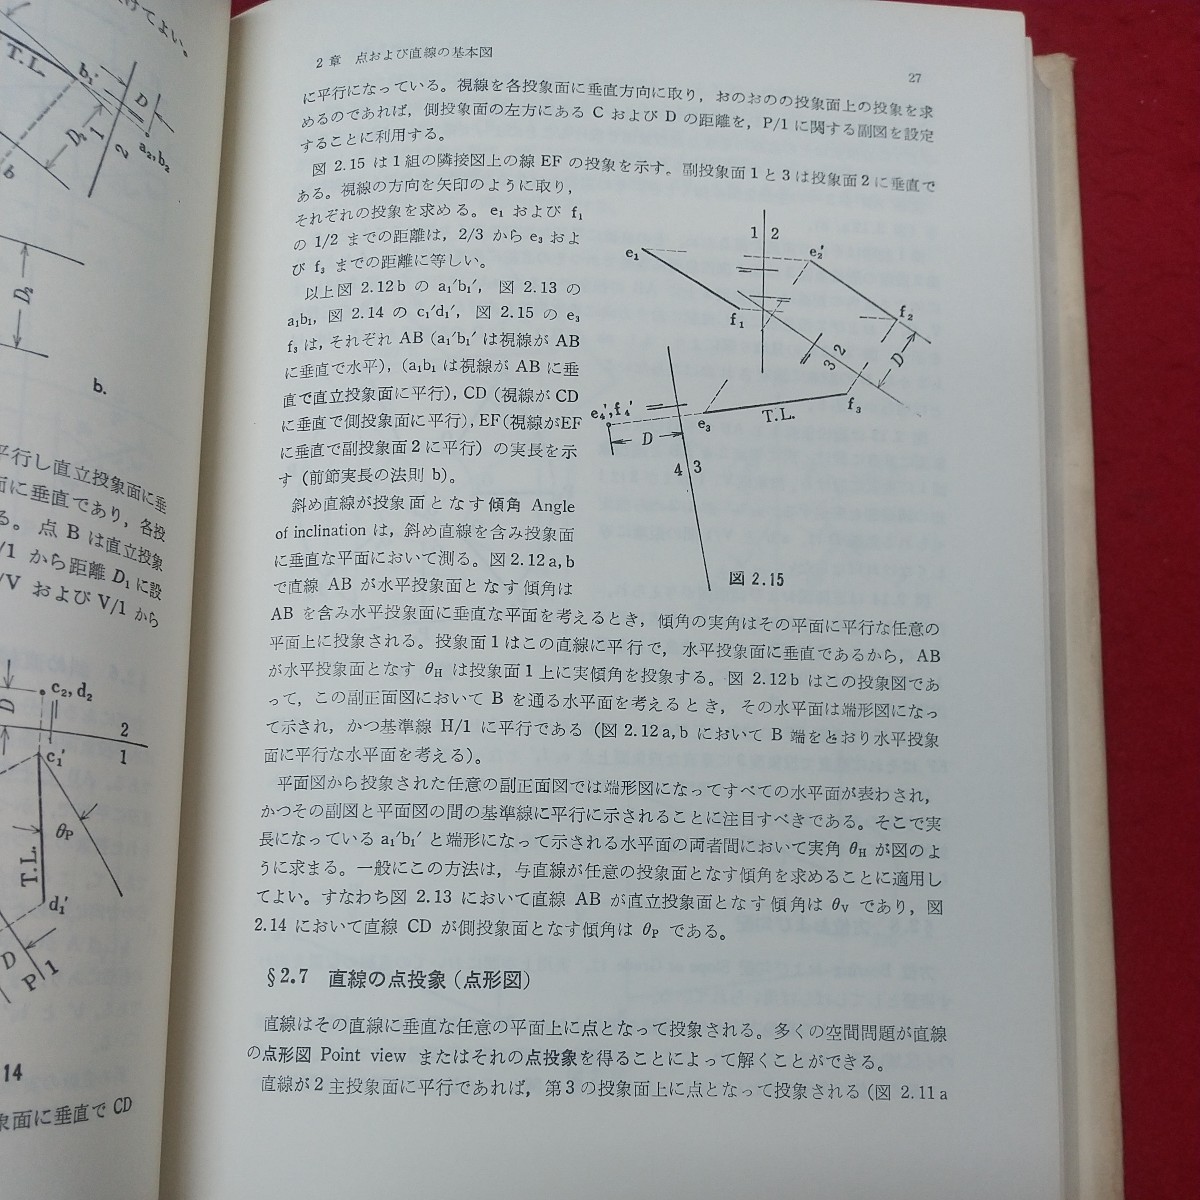 b-607 ※8 第3角法の図学 著者 澤田詮亮 昭和58年4月1日 9版発行 三共出版 数学 図学 幾何学 点 直線 平面 回転 曲線 立体 ねじれ面_画像7